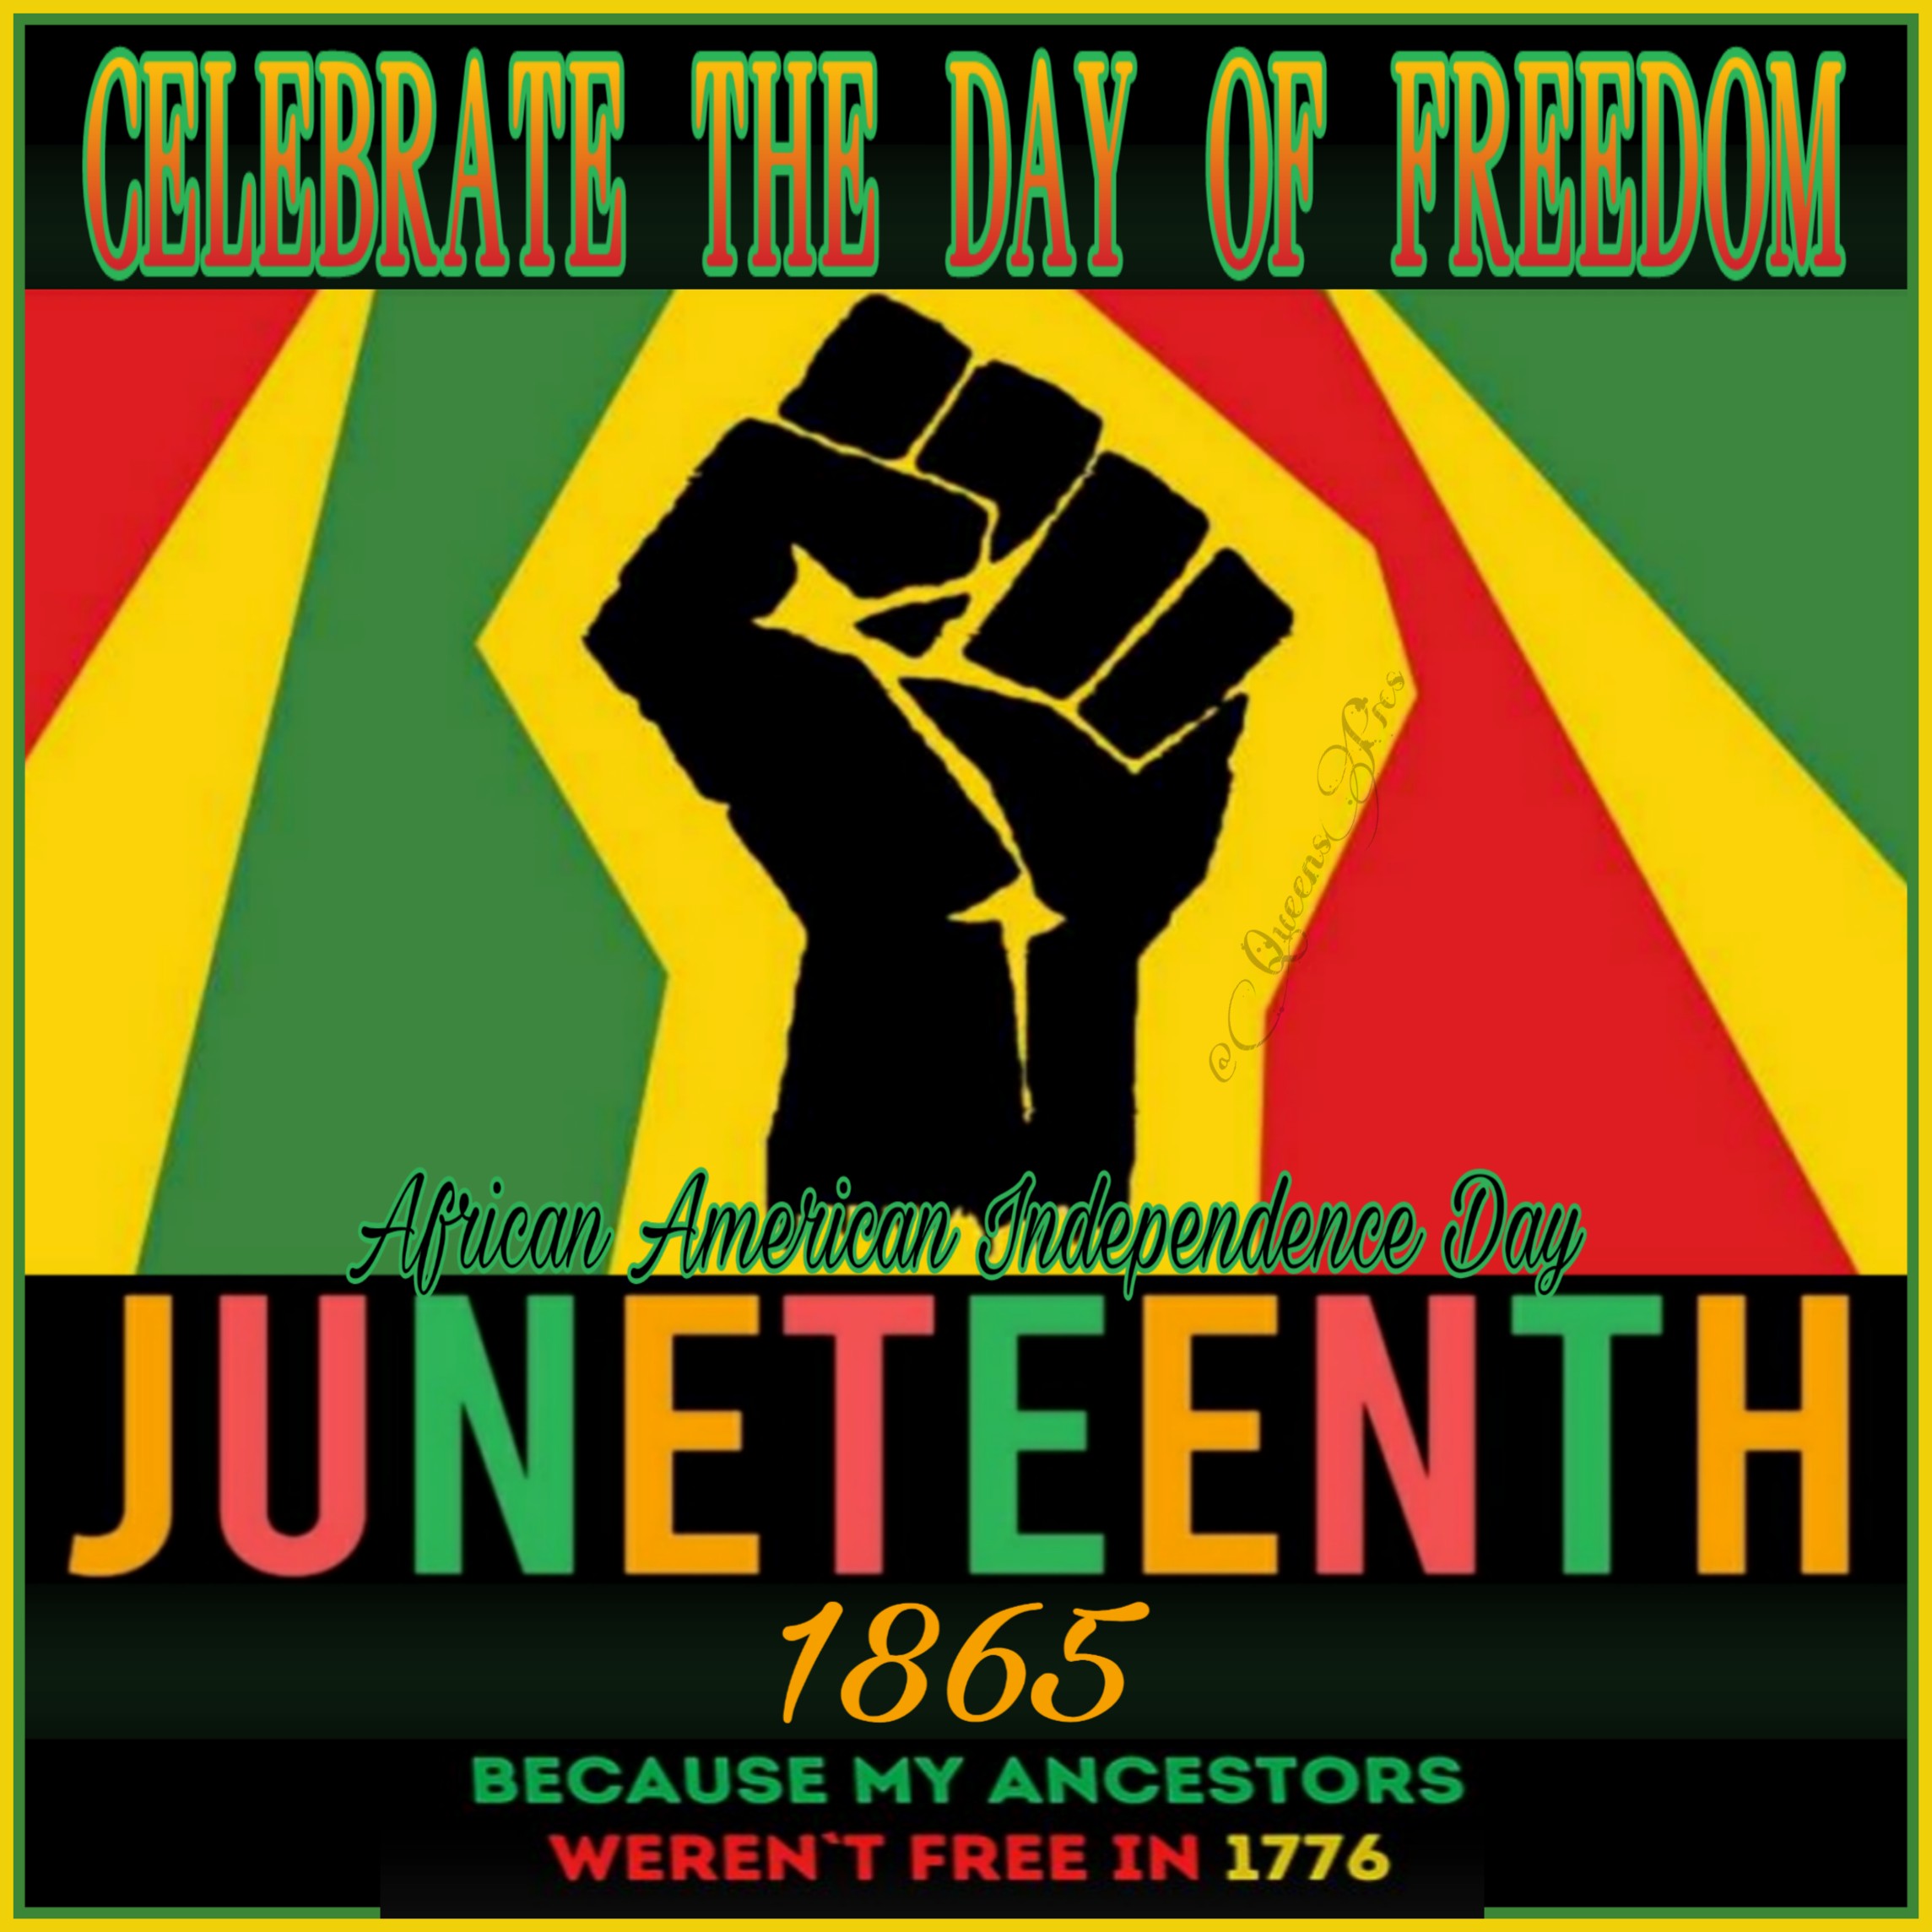 #juneteenth #freedomday #celebratefreedom #celebrate #blackindependenceday #black #juneteenth2020 #blacklivesmatter 